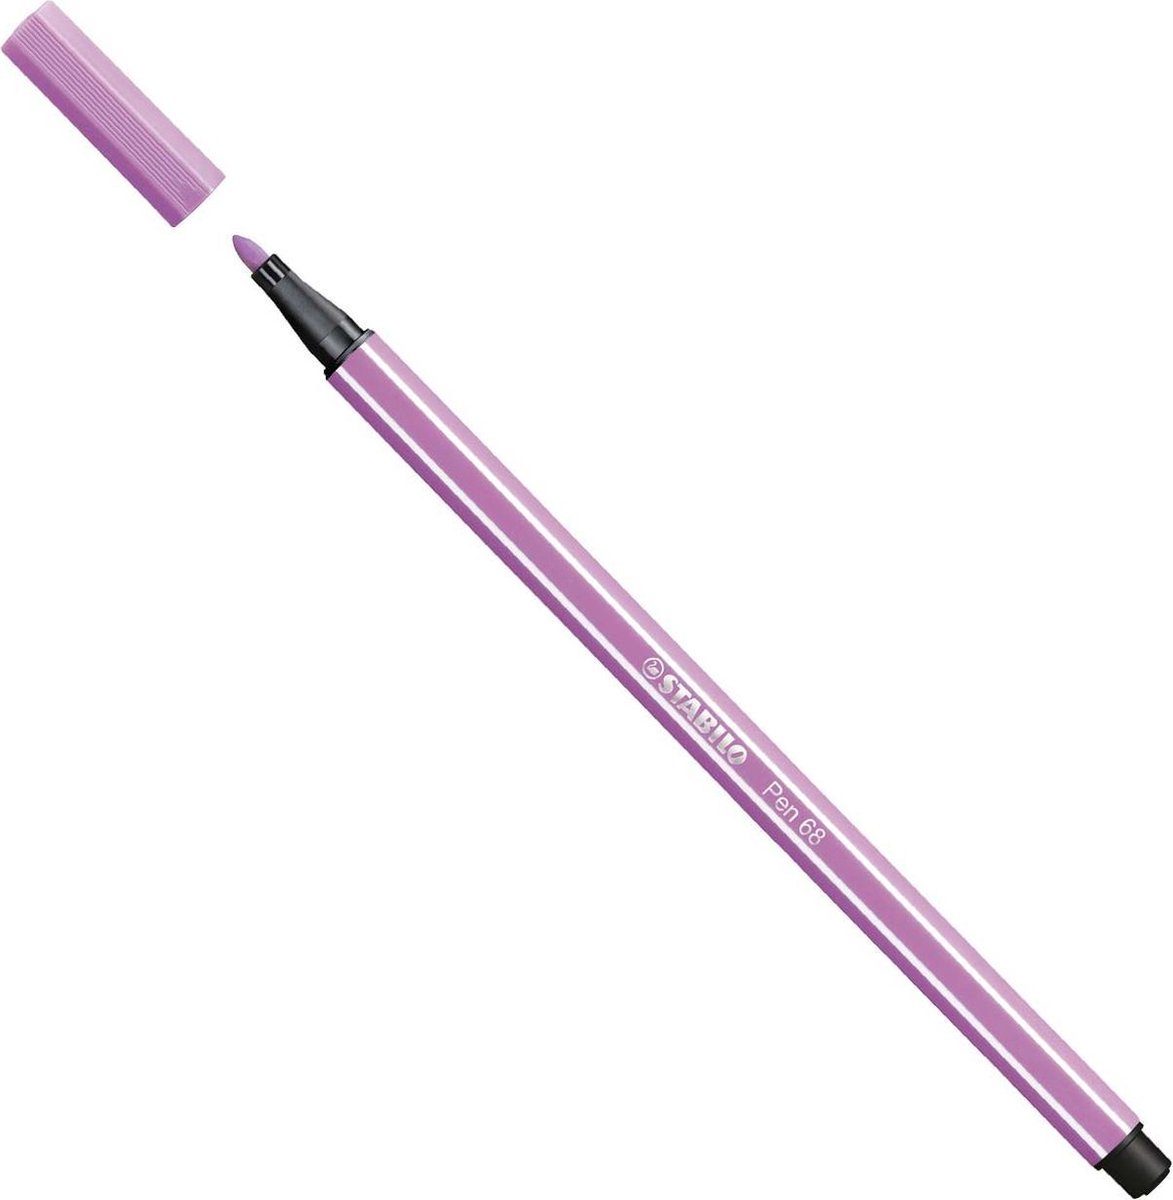 STABILO Pen 68 - Premium Viltstift - Licht Lila - per stuk